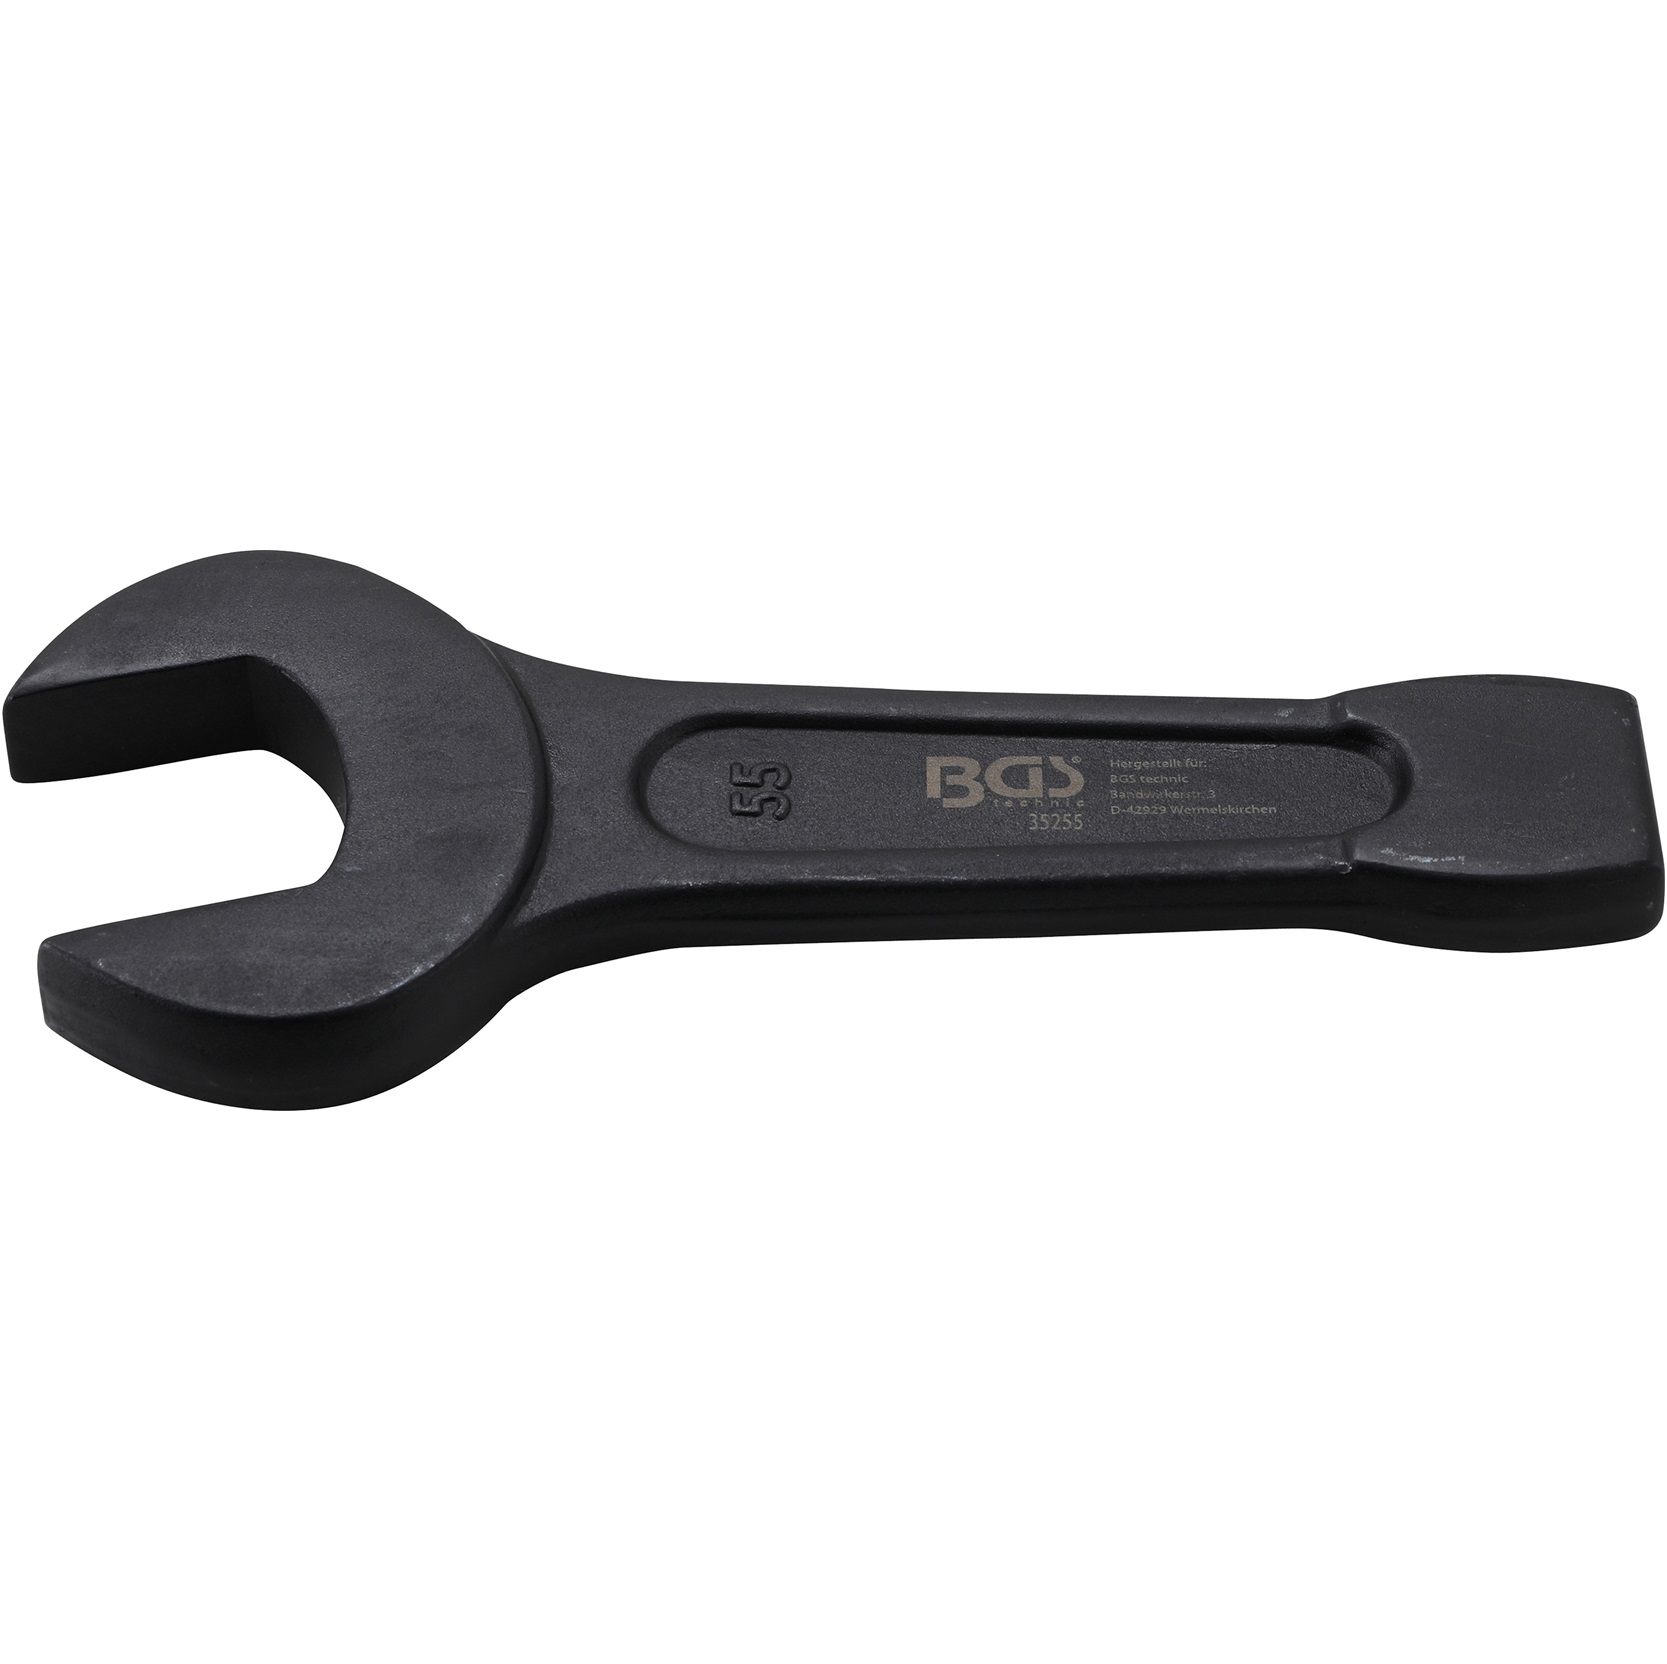 Kľúč plochý vidlicový, úderový, 55 mm BGS 35255